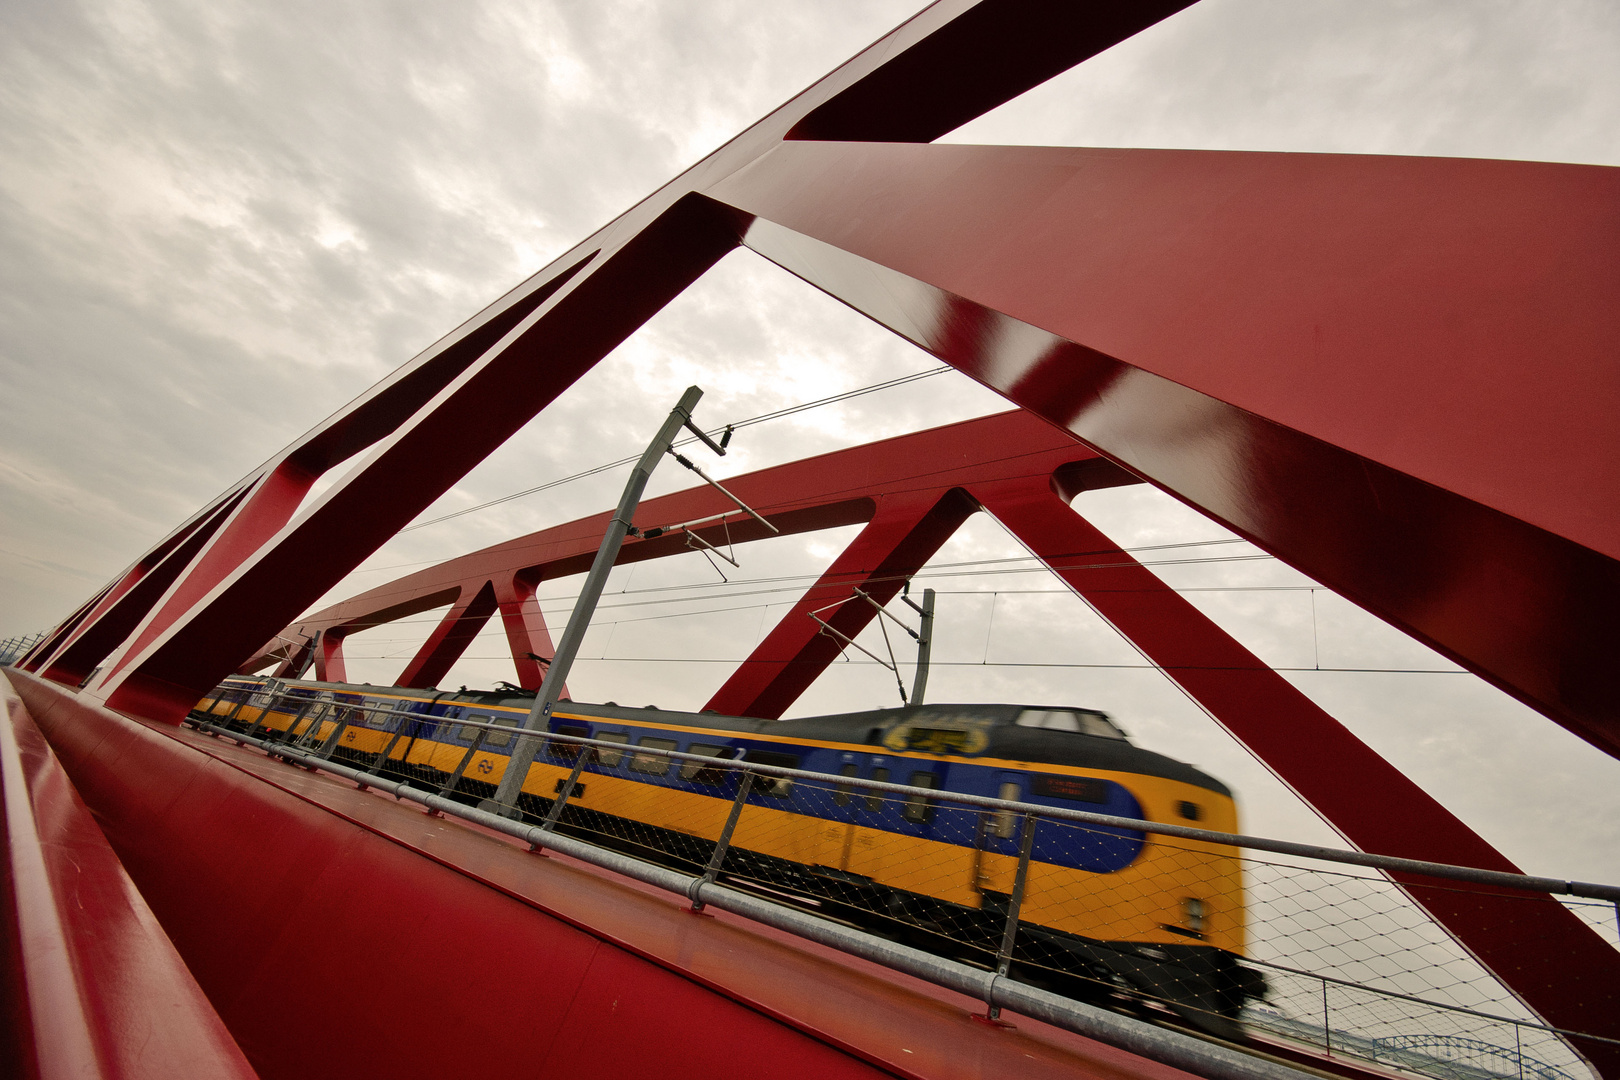 Zwolle - Hanzeboog (Railway Bridge across Ijssel River) - 02